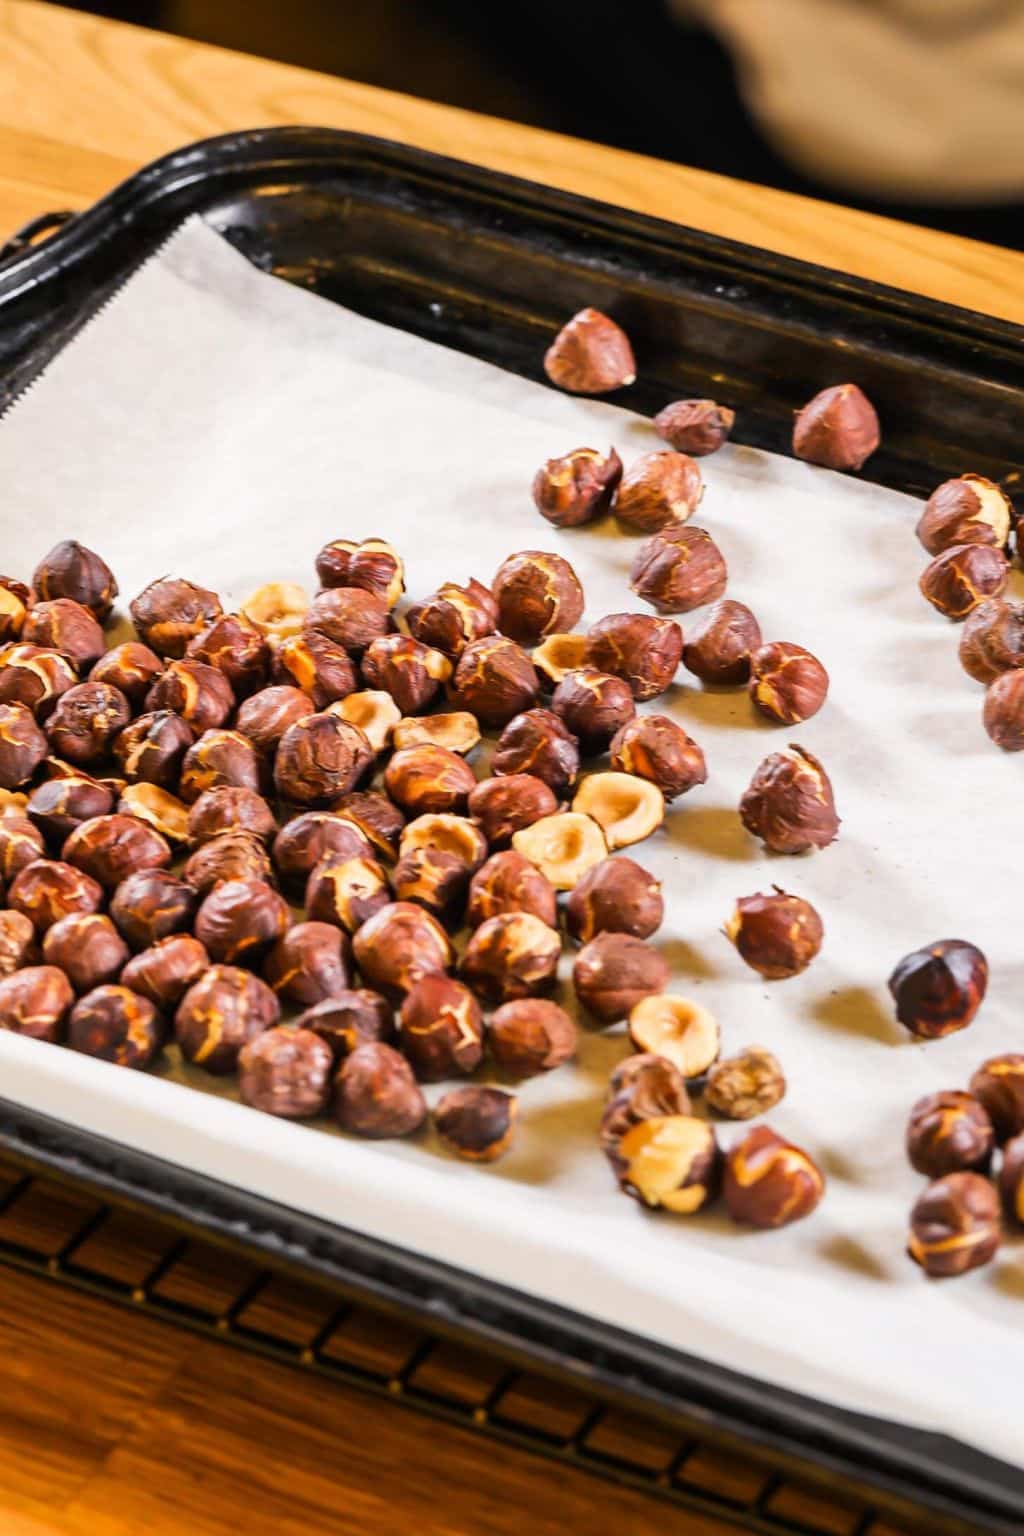 How to Roast Hazelnuts